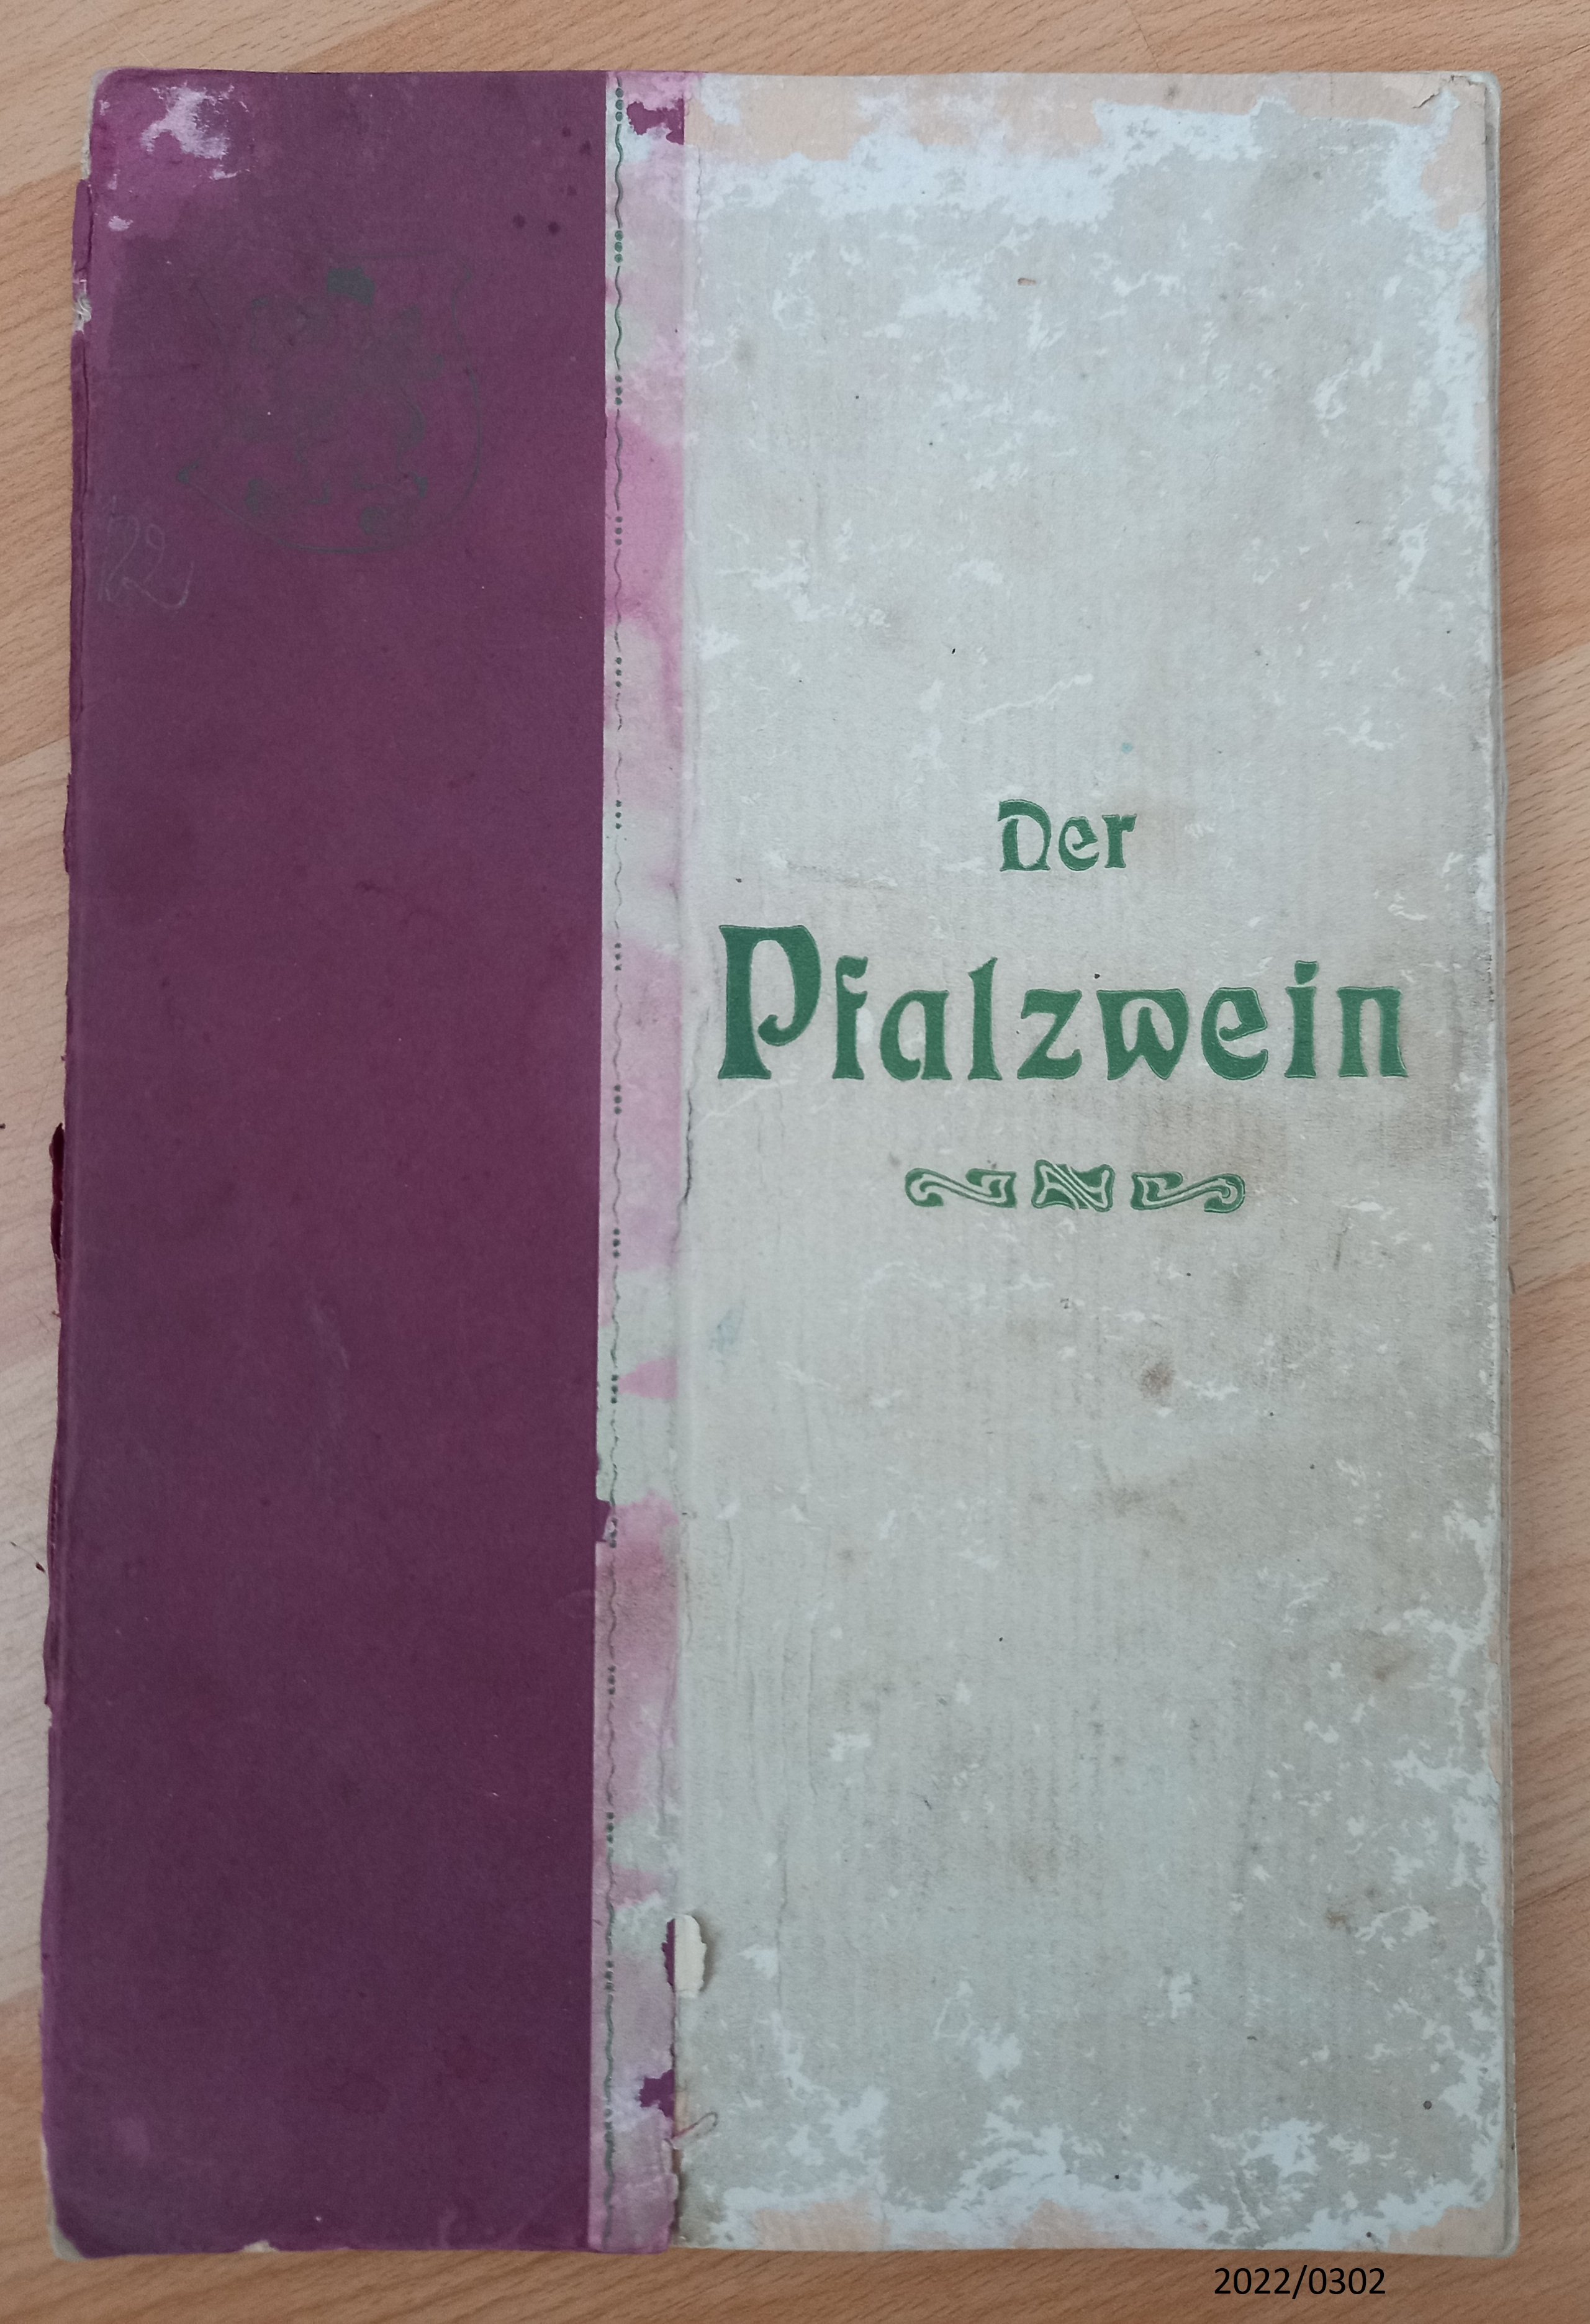 Buch "Der Pfalzwein" (Stadtmuseum Bad Dürkheim im Kulturzentrum Haus Catoir CC BY-NC-SA)